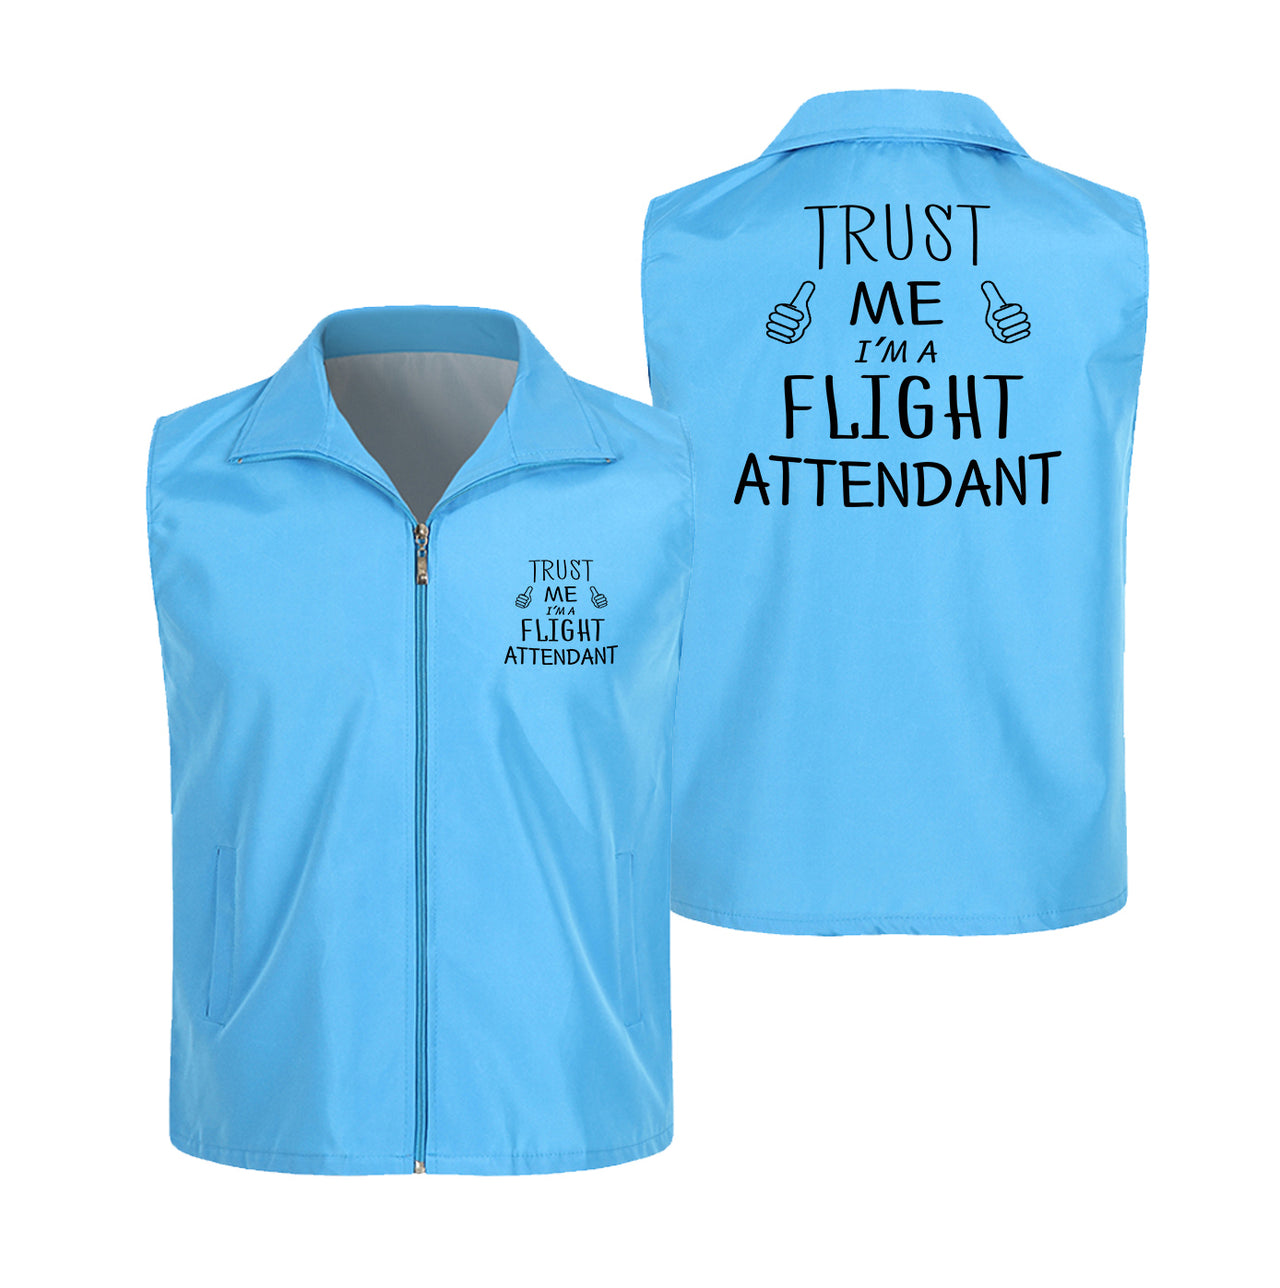 Trust Me I'm a Flight Attendant Designed Thin Style Vests